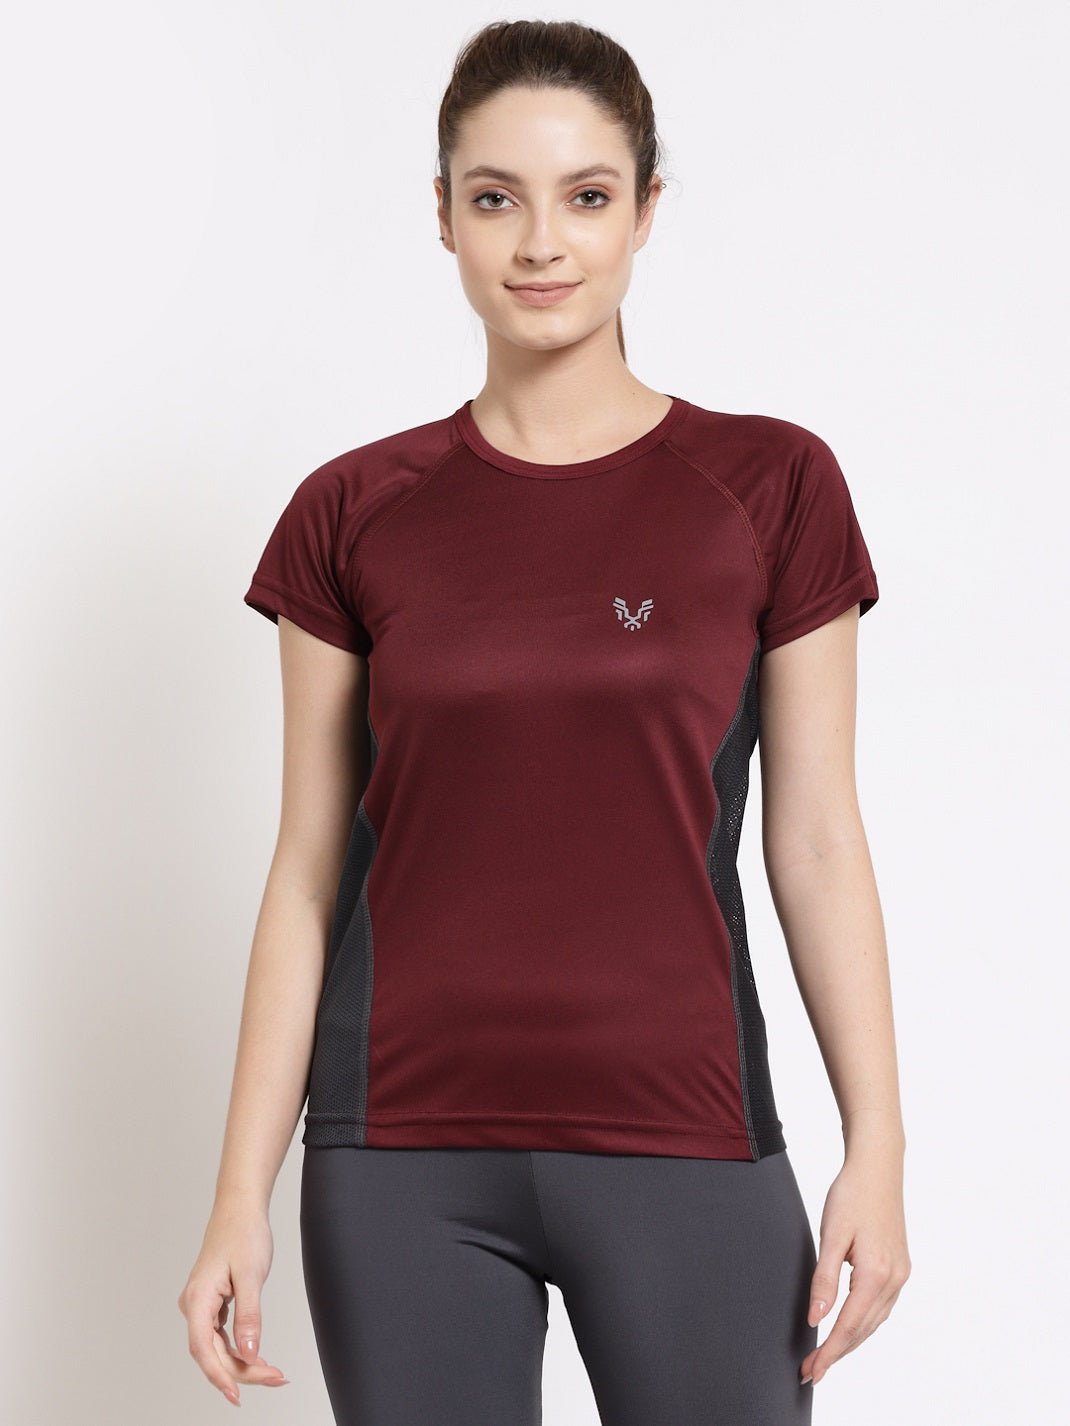 bank Boek het is mooi UZARUS Women's Dry Fit Workout Top Sports Gym T-Shirt